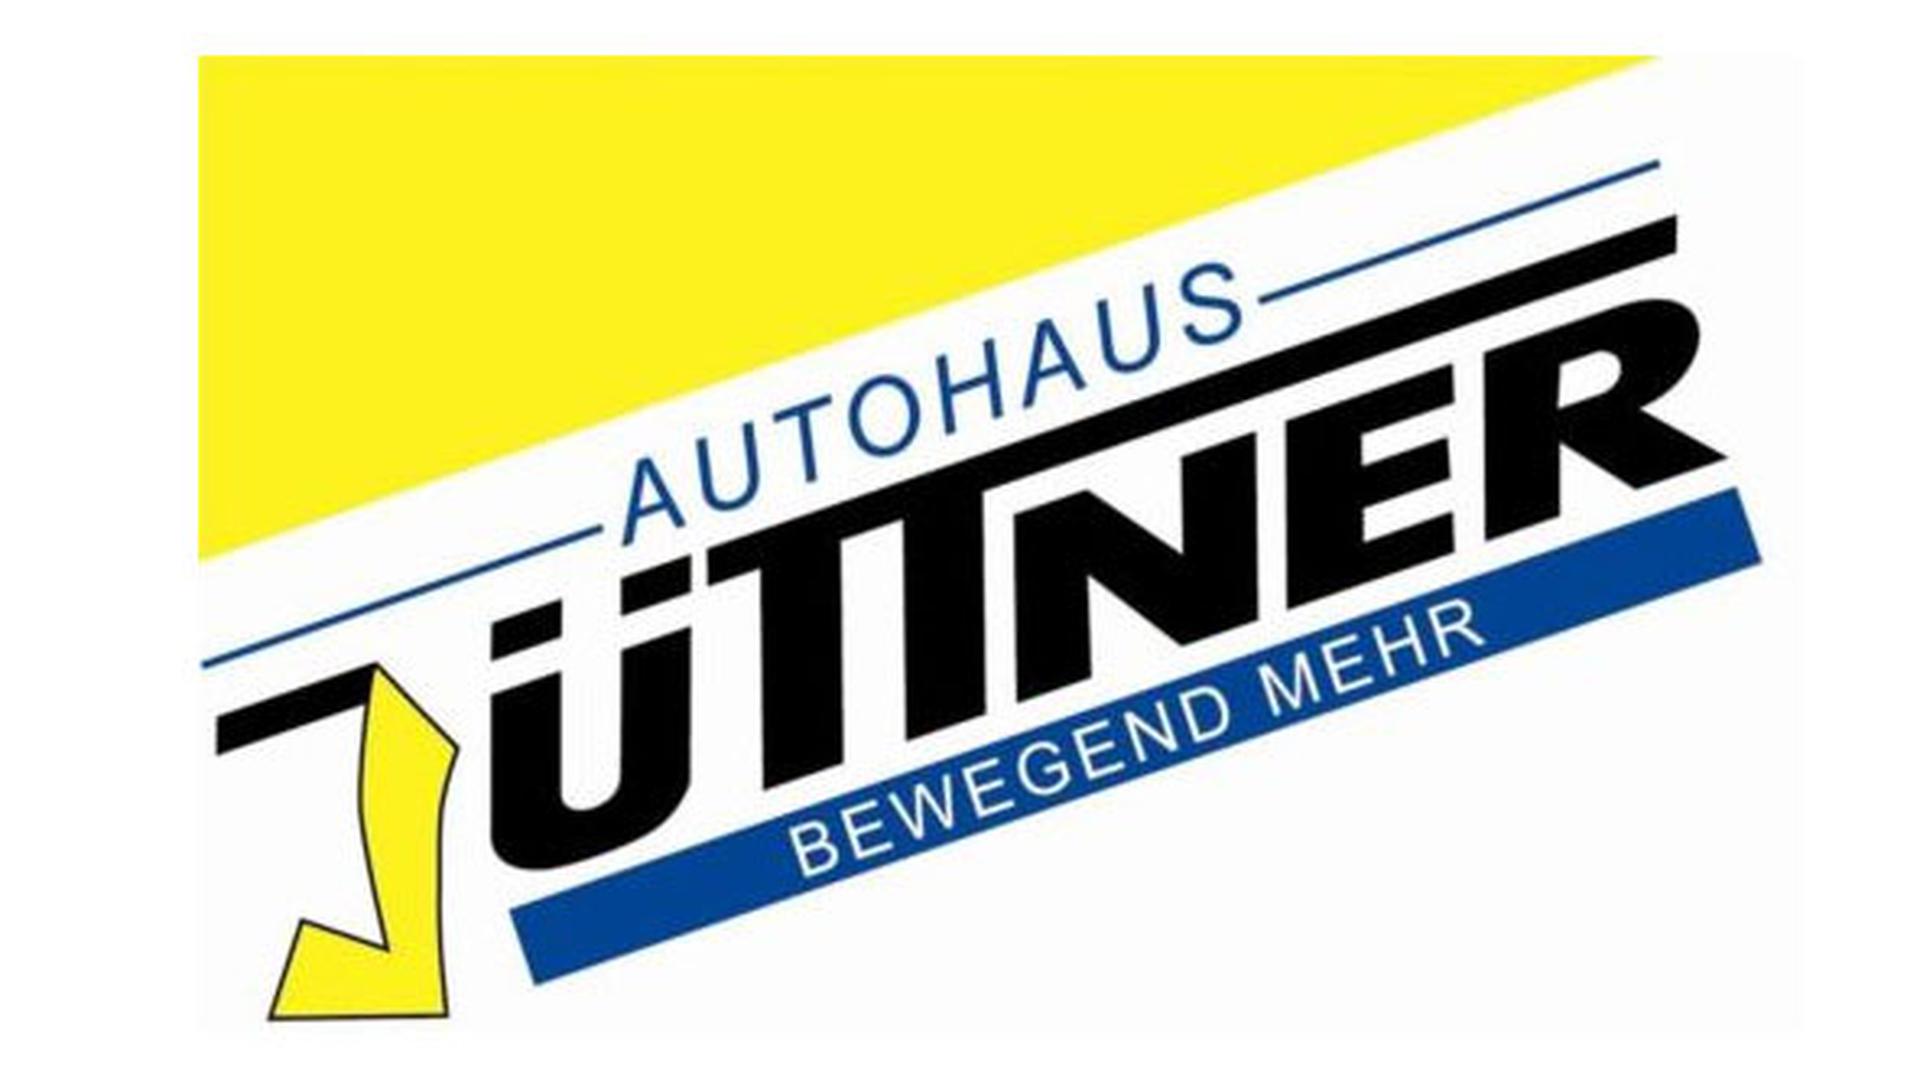 Juettner Autohaus - BEWEGEND MEHR